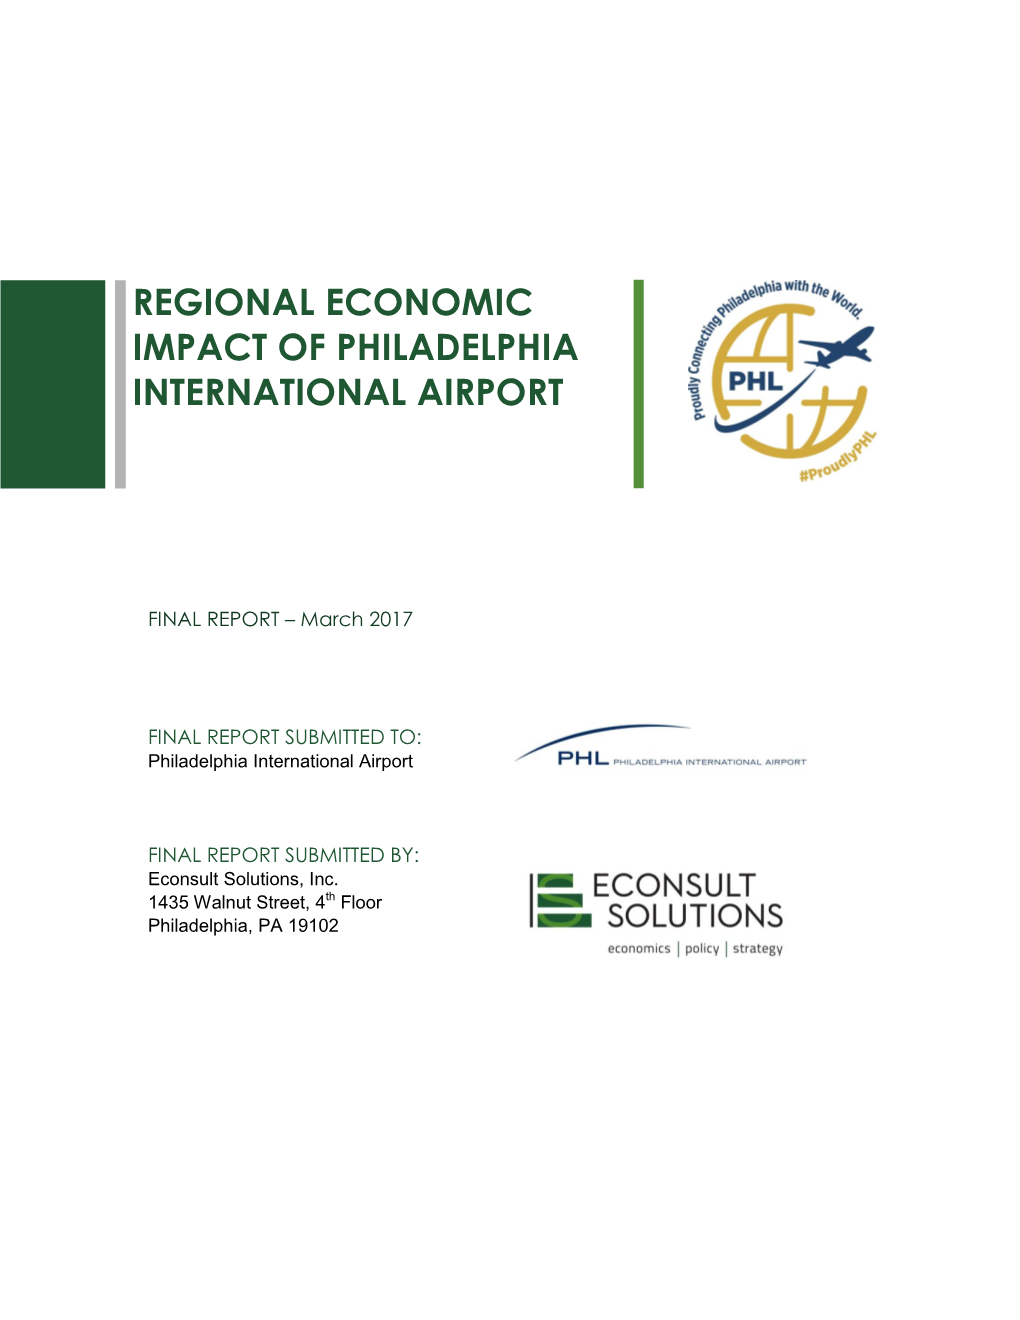 Regional Economic Impact of Philadelphia International Airport | Final